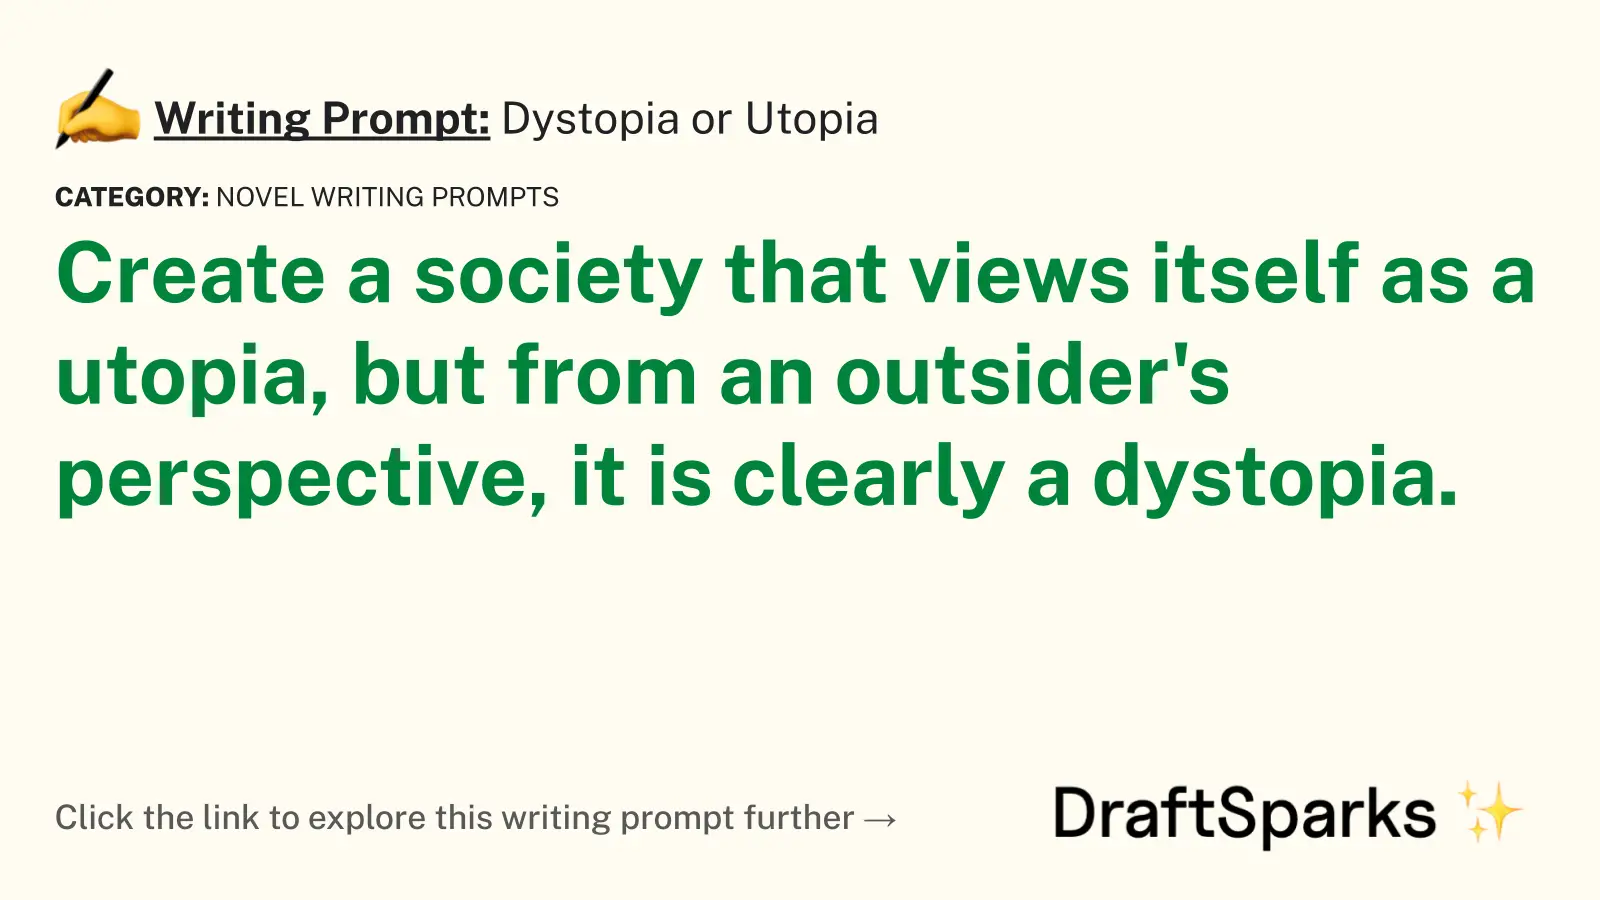 Dystopia or Utopia